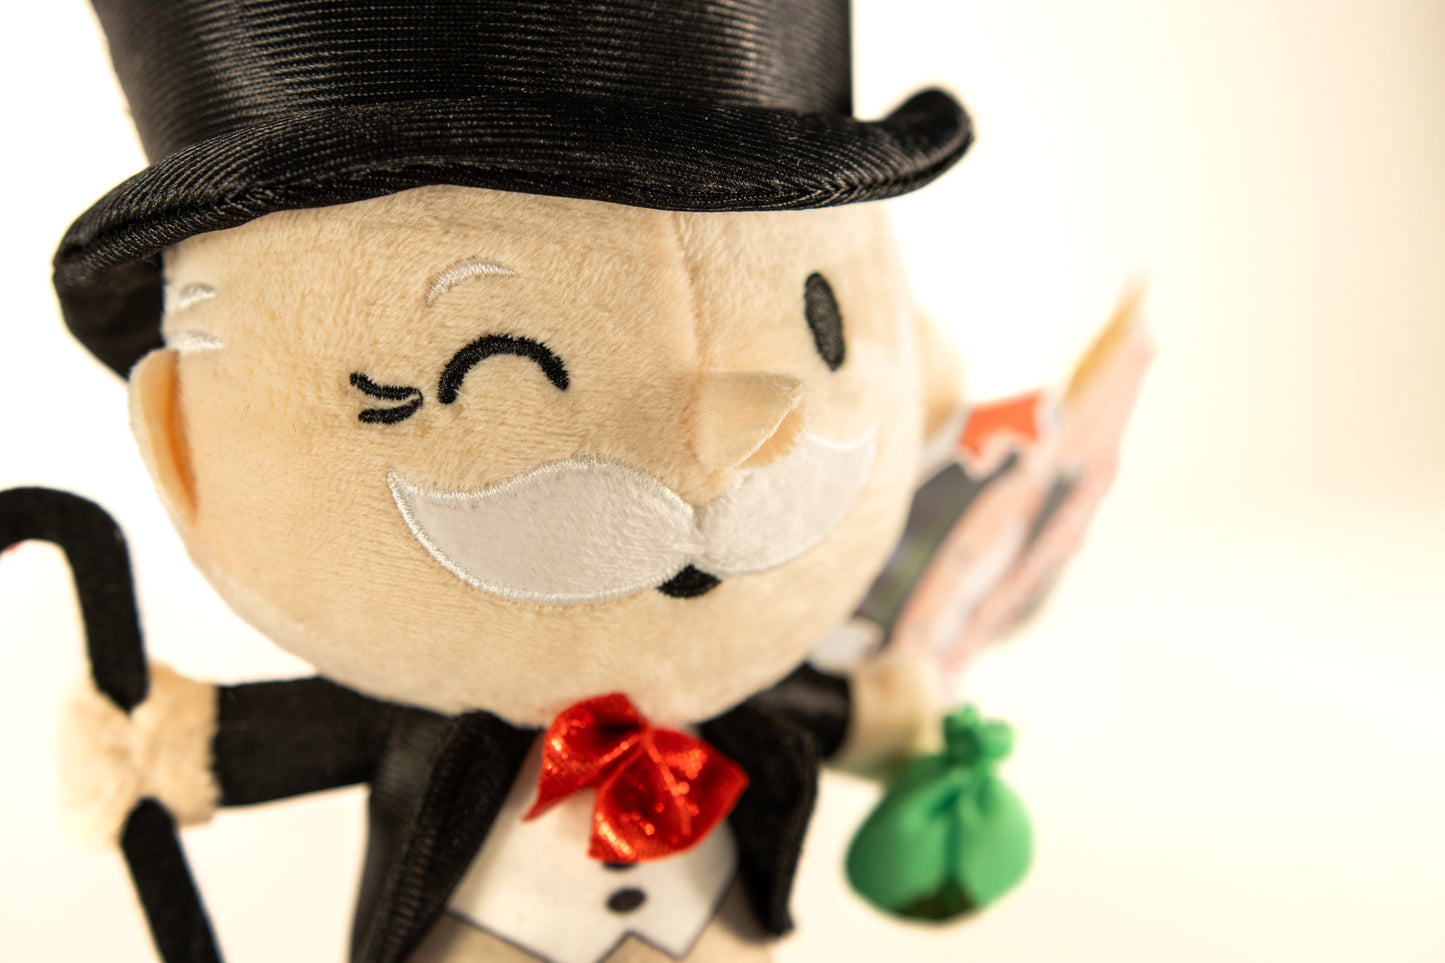 Mr. Monopoly knuffel pluche